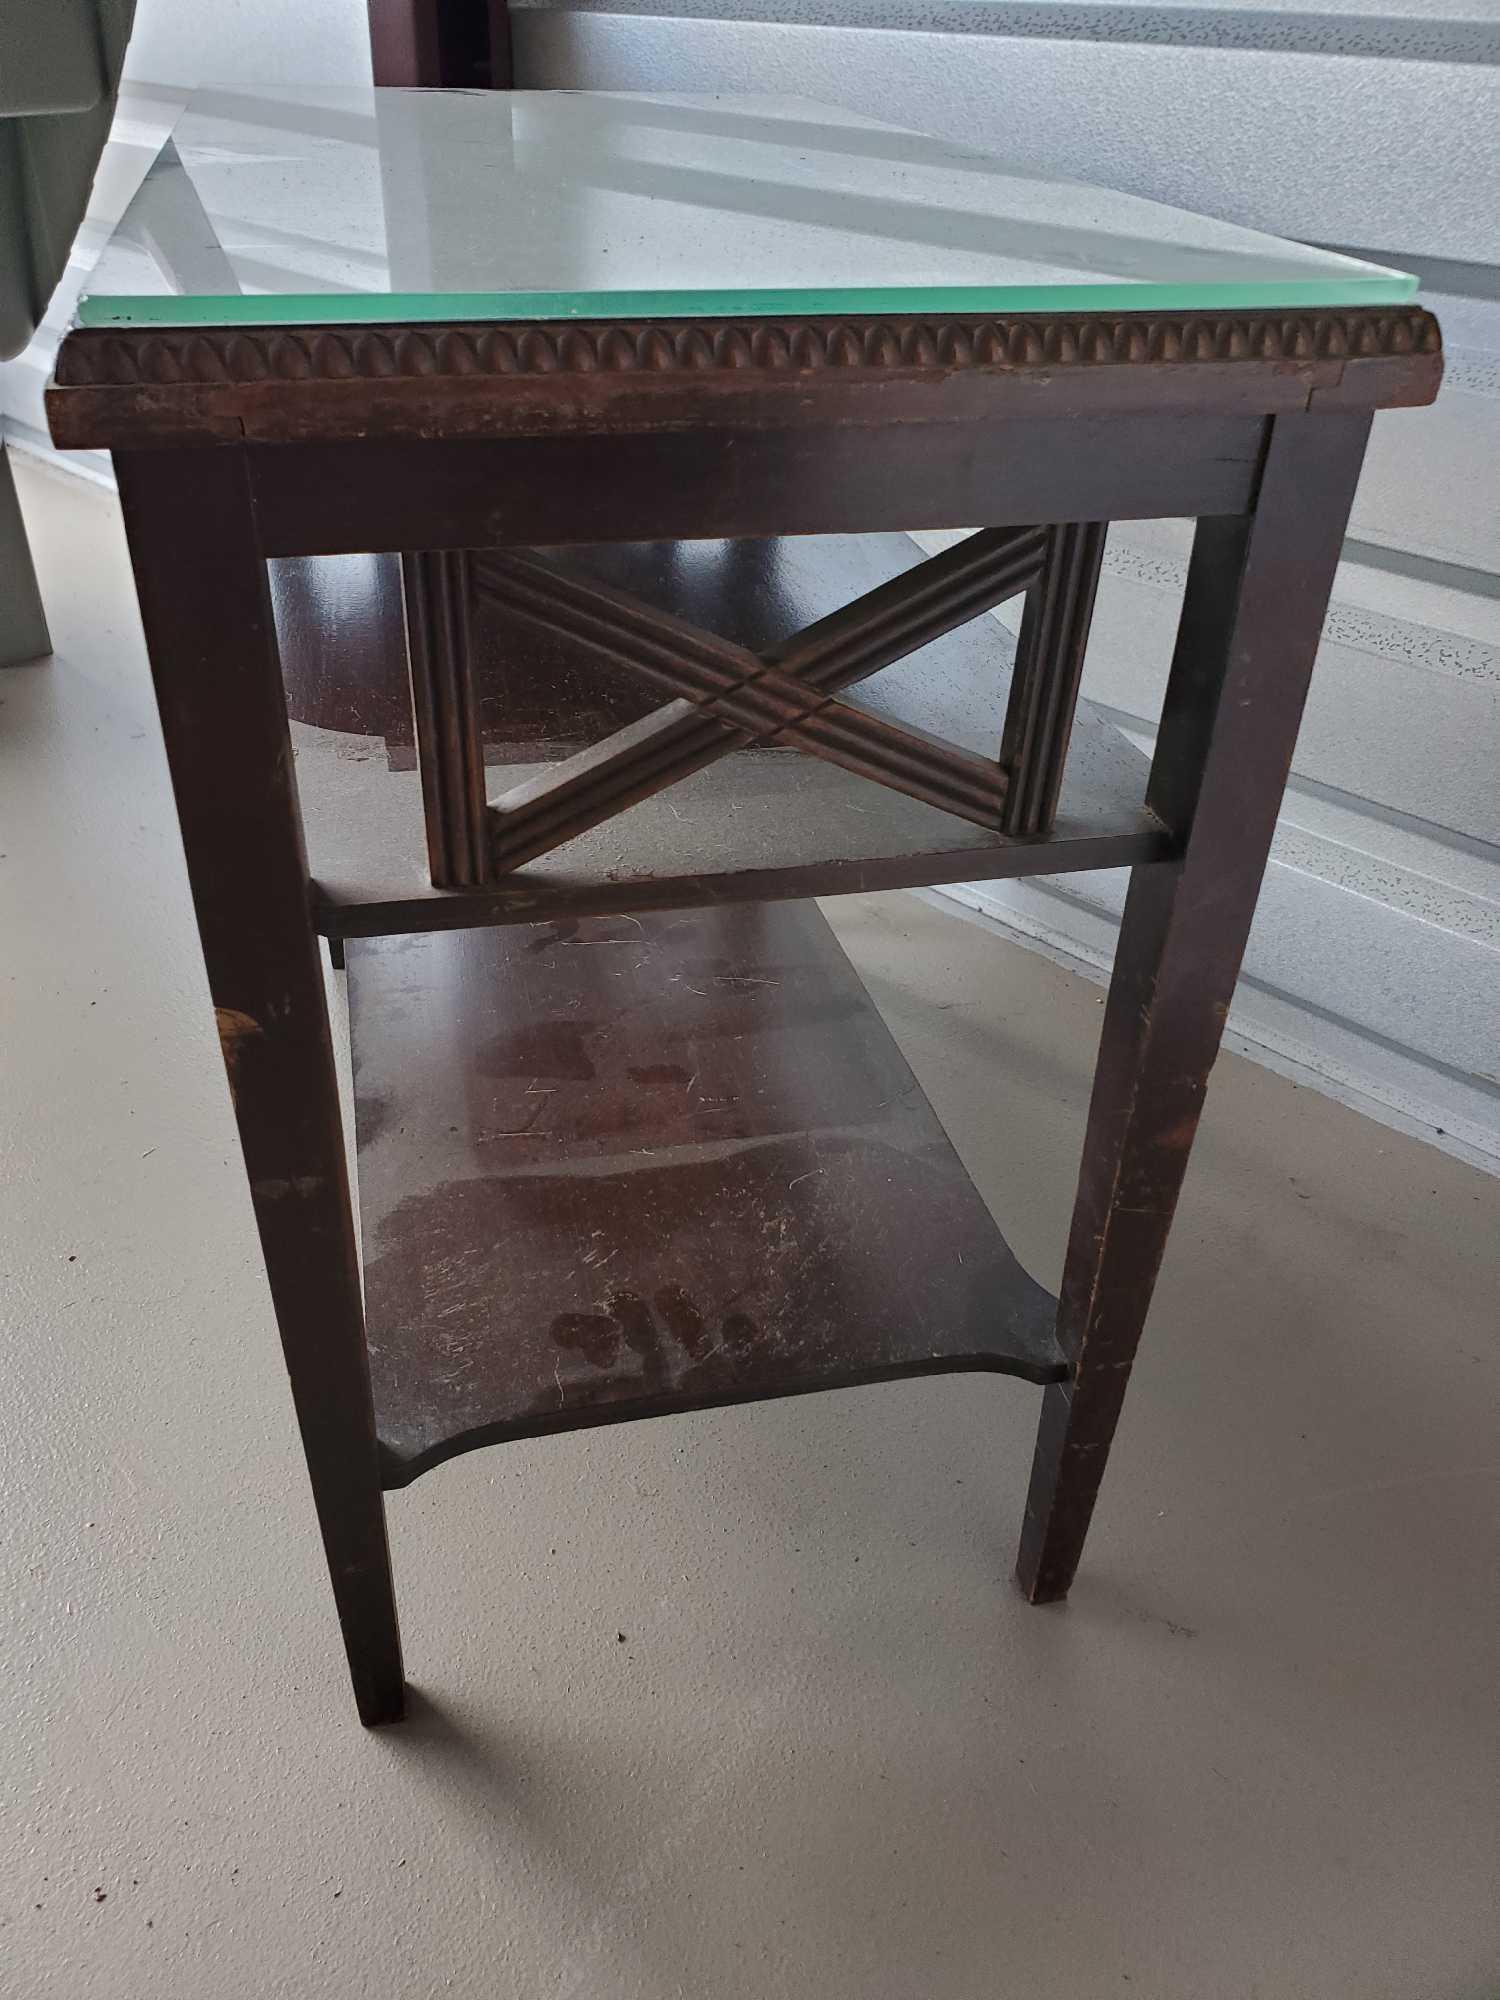 Antique glass top, 2 shelf, petite coffee table 26"W x 14" D x 23" H